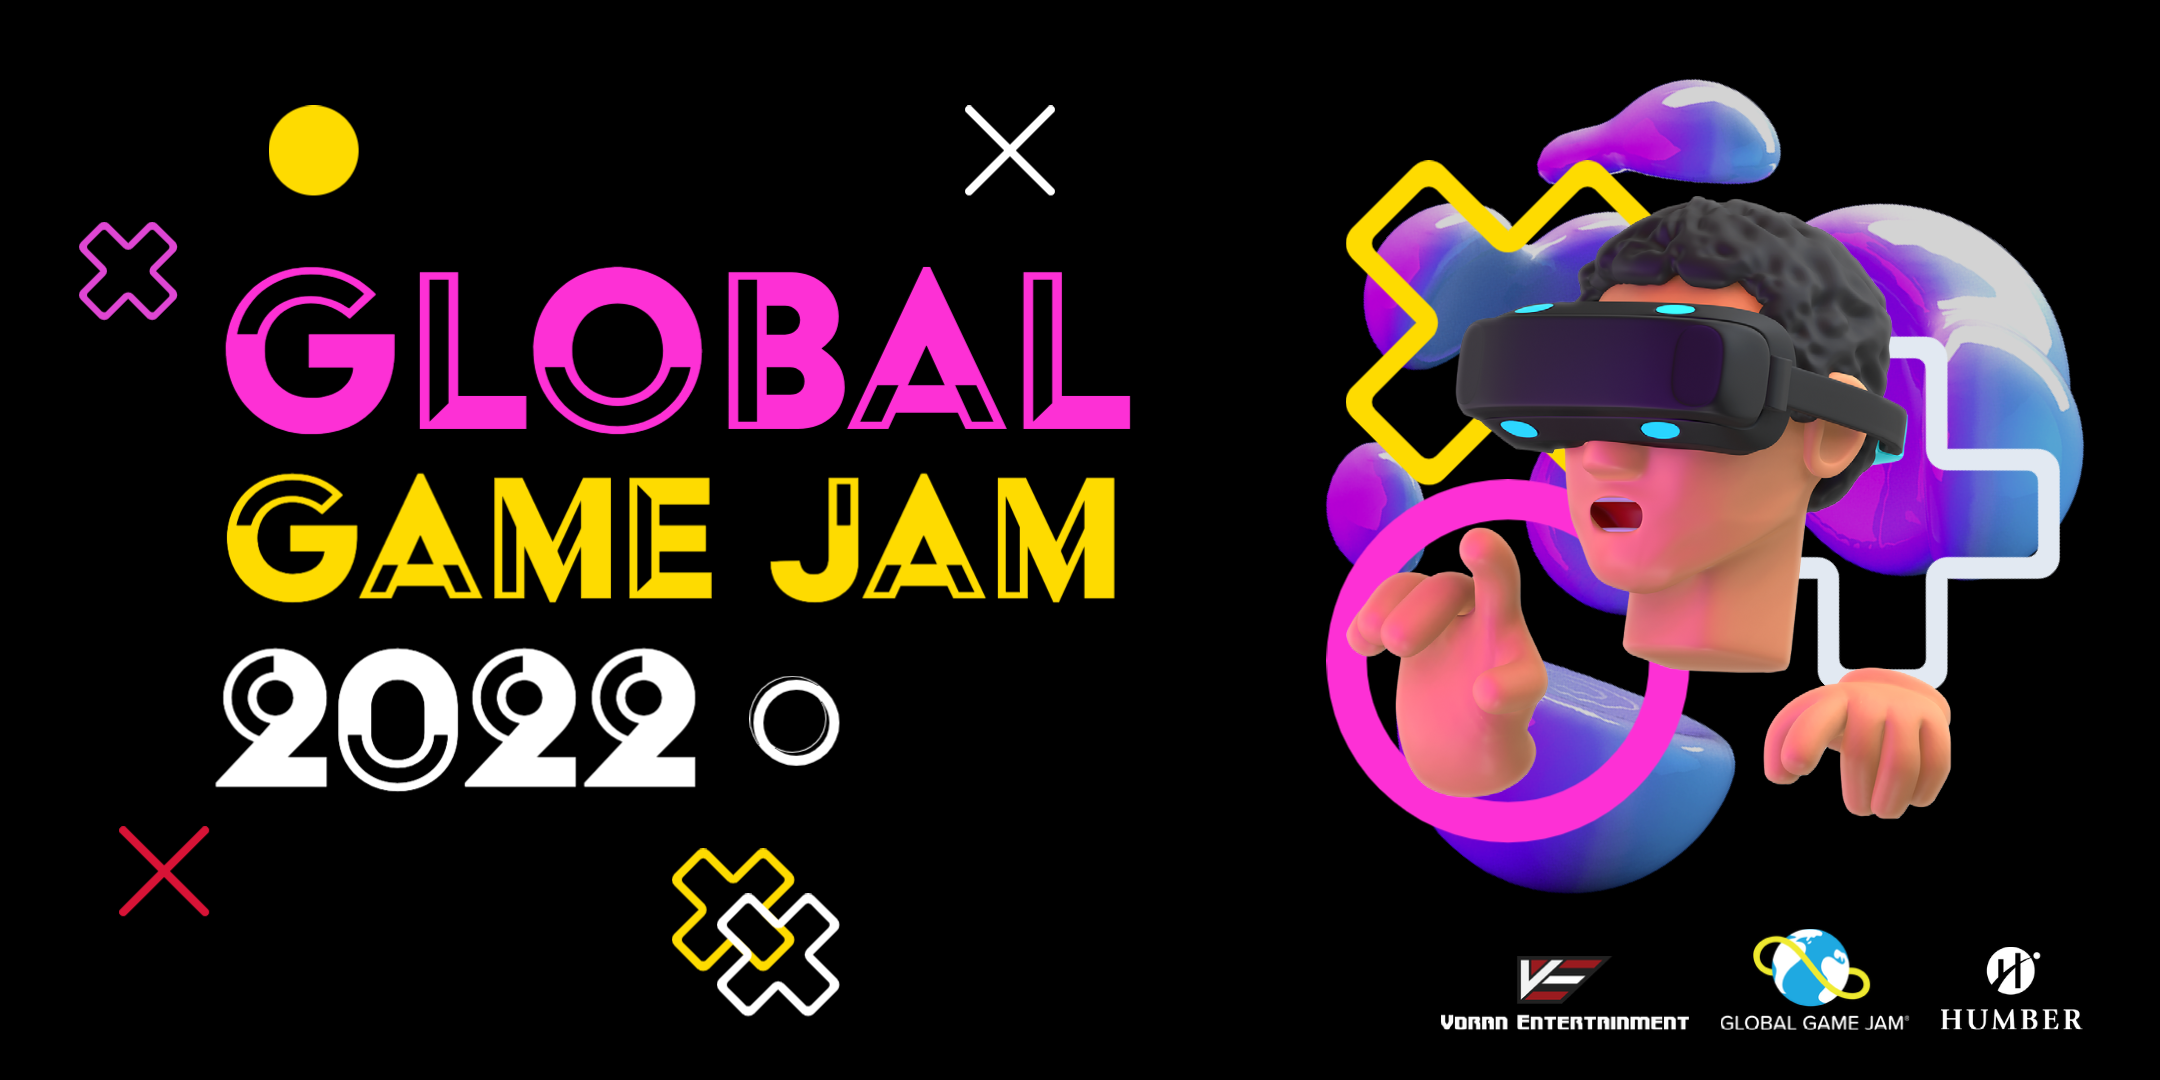 Global Game Jam 2022 poster